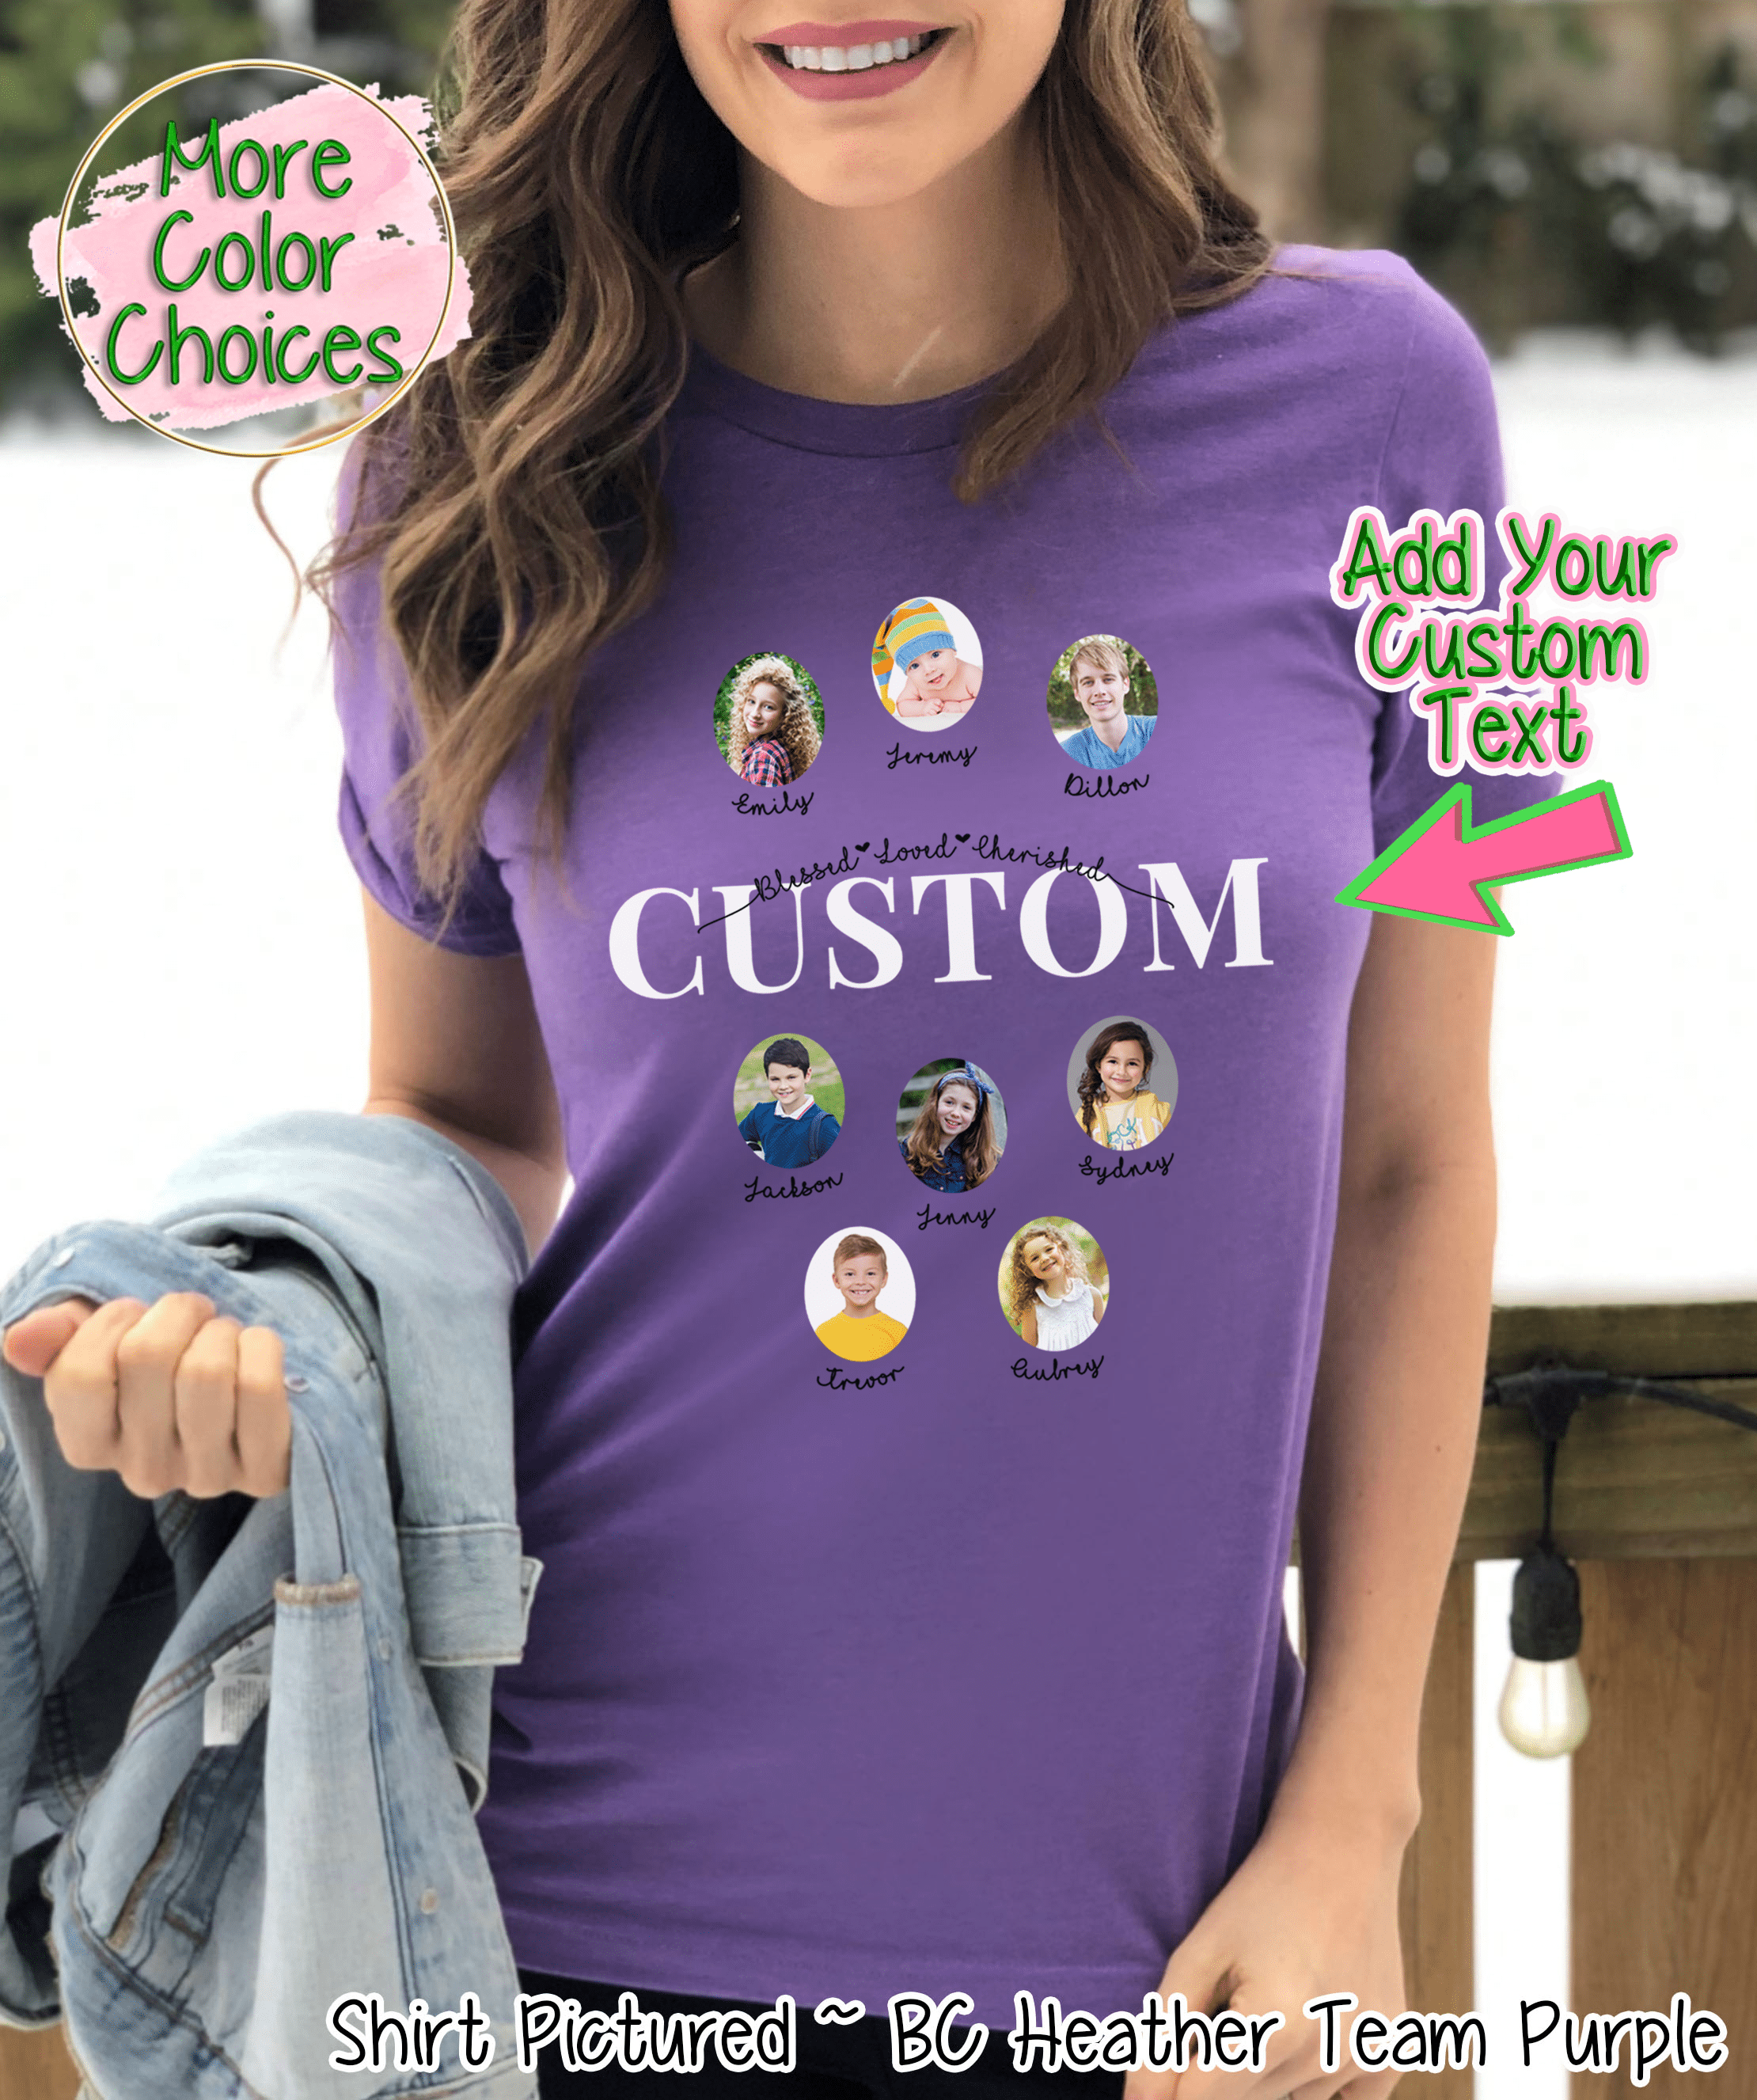 Personalized CUSTOM TEXT Photo Shirt ~ Individual Kids/Grandkids Photos & Names